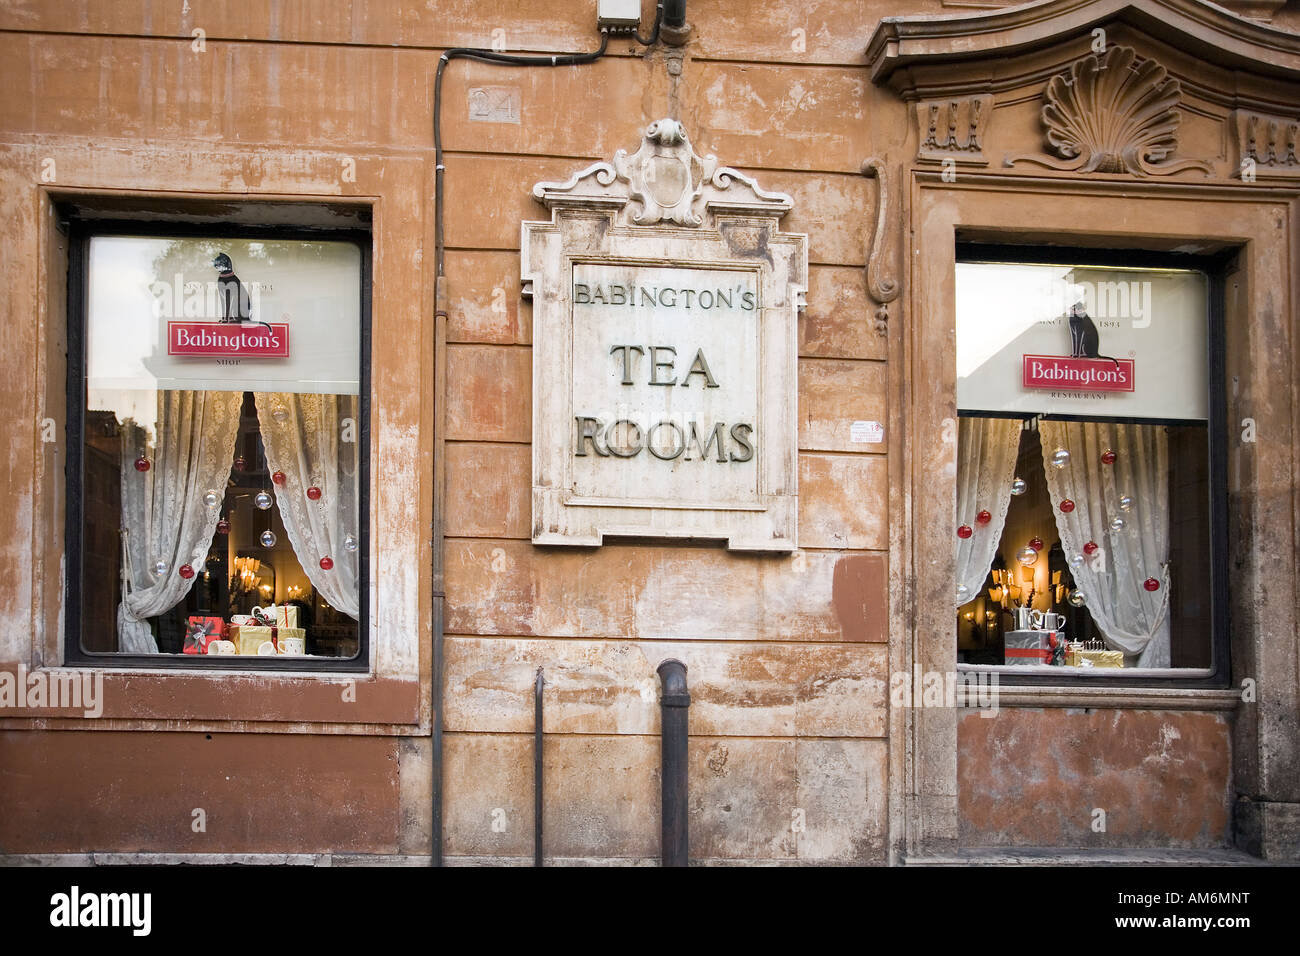 Babingtons sale da tè, Roma, Italia Foto Stock